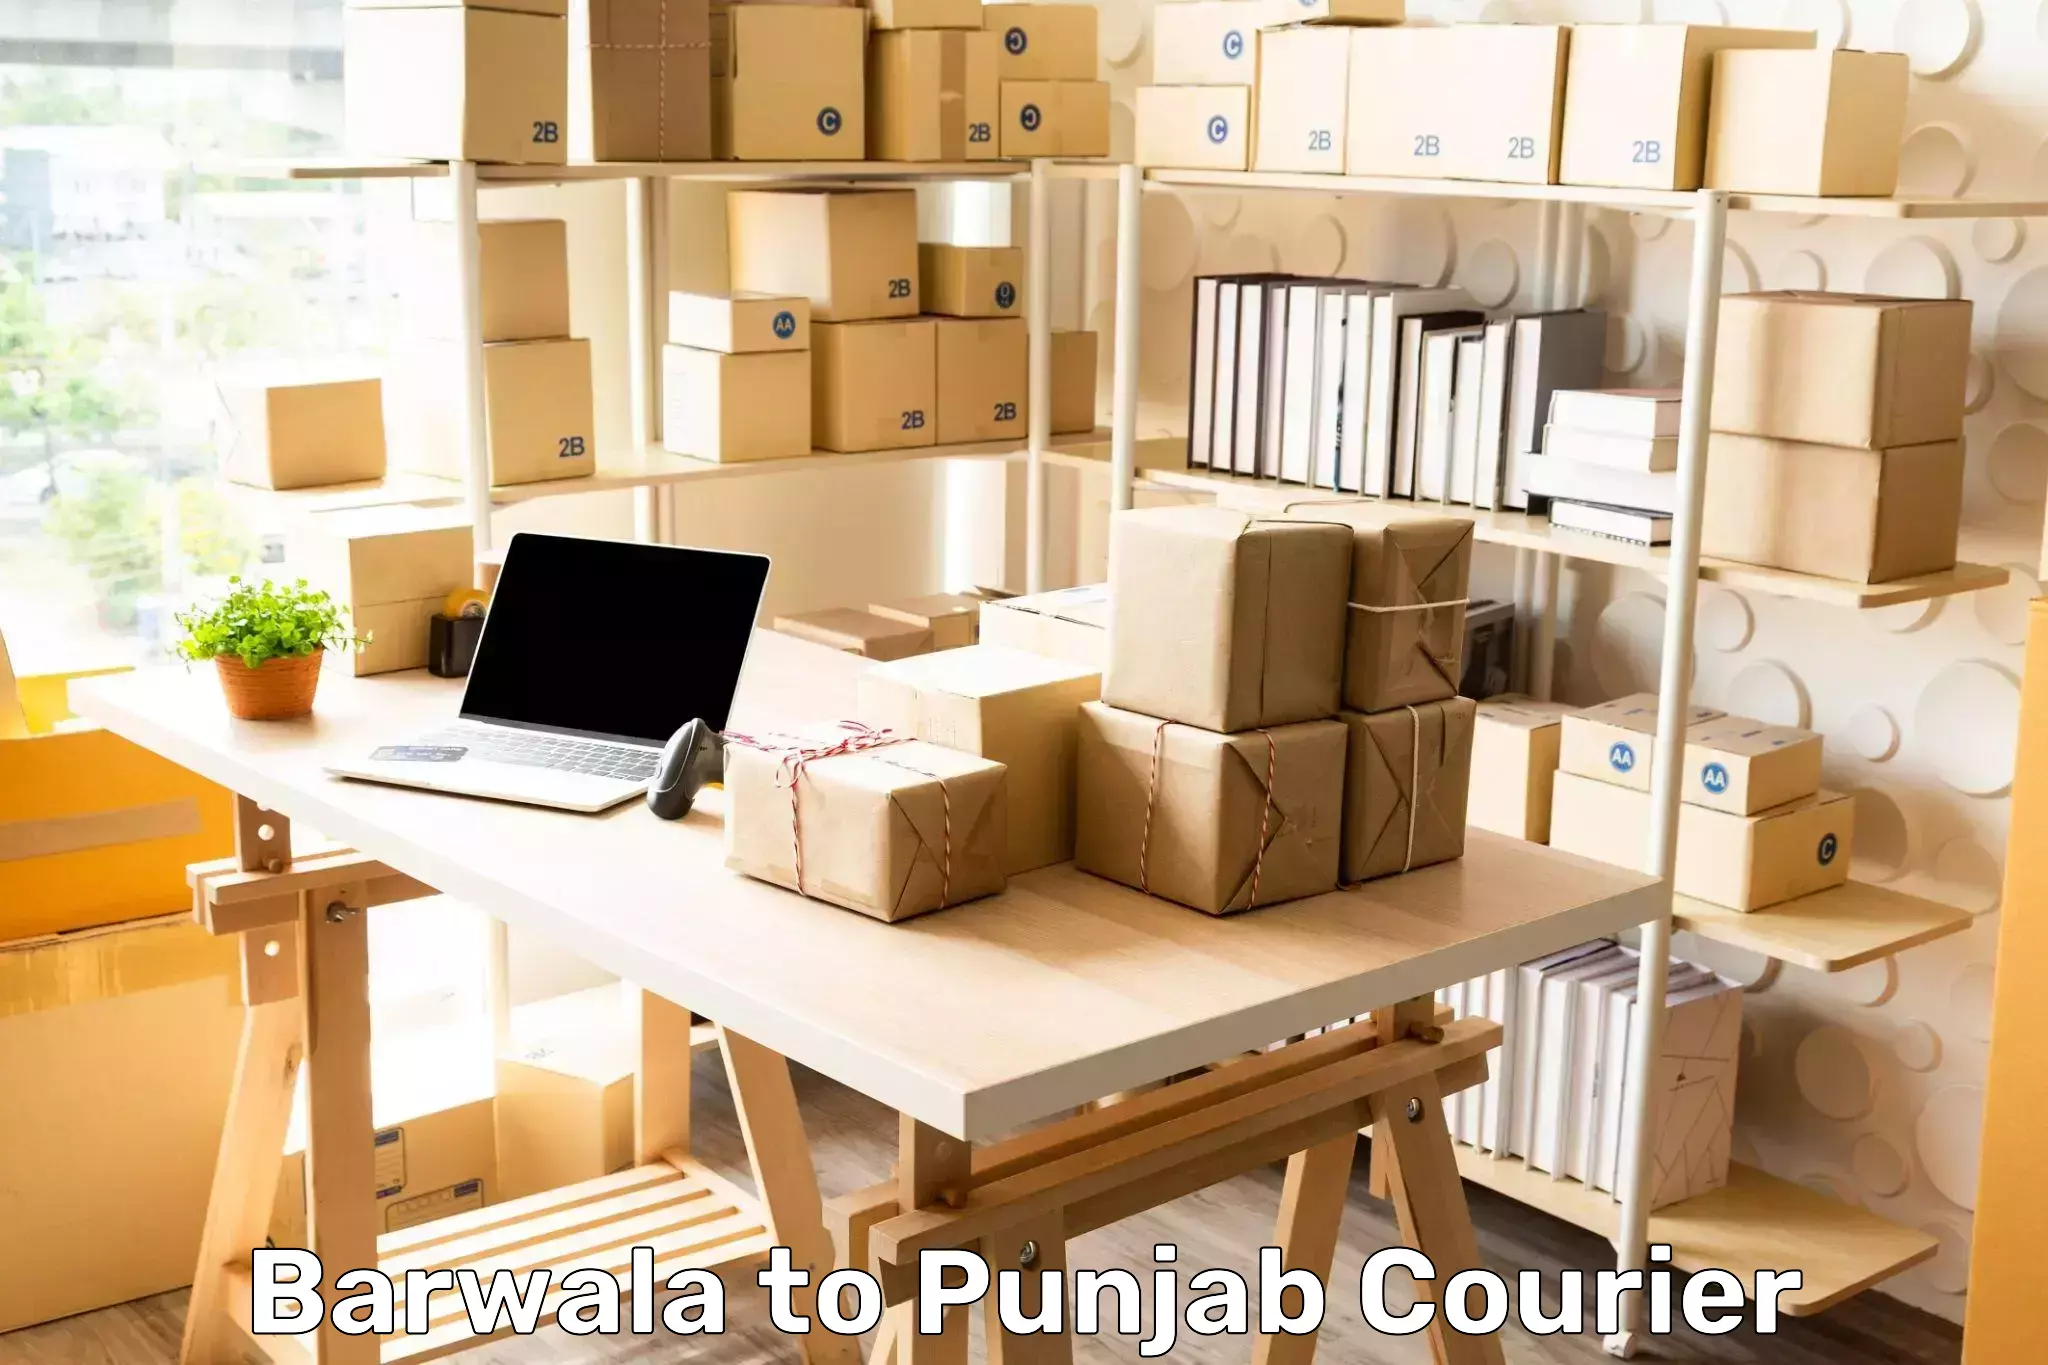 Bulk courier orders Barwala to Batala